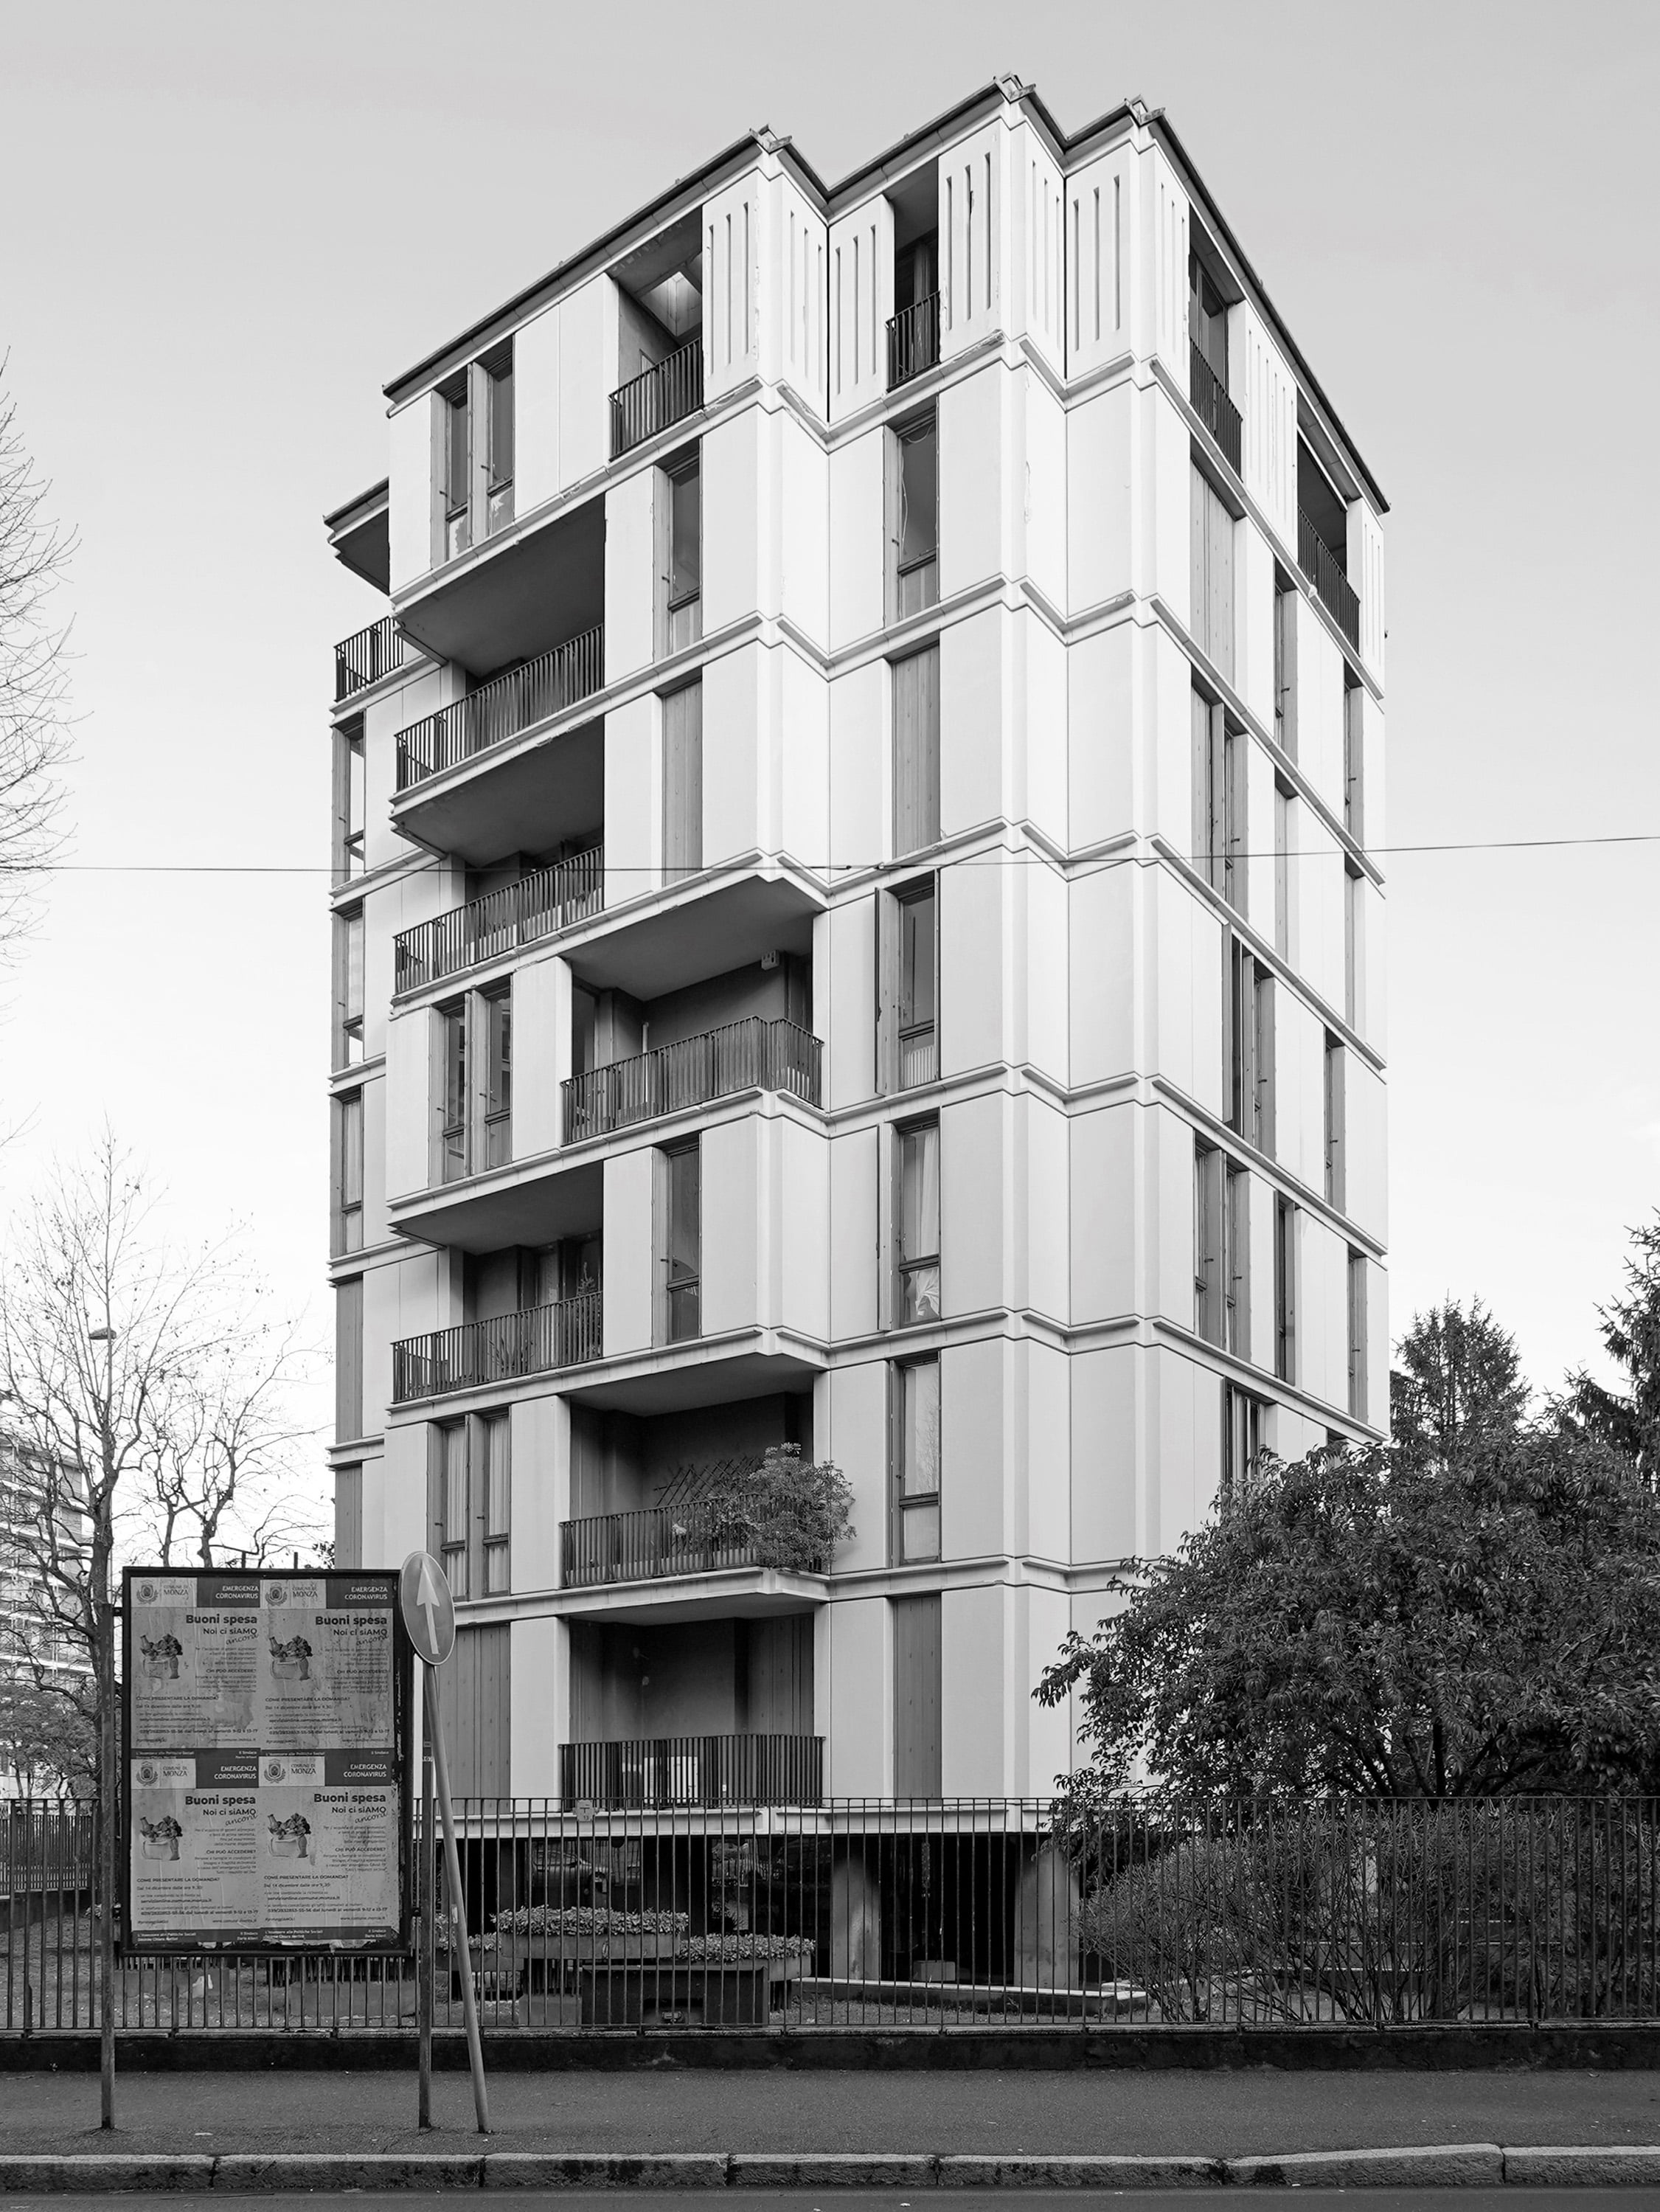 alessandro-villa-architettura-negletta-02